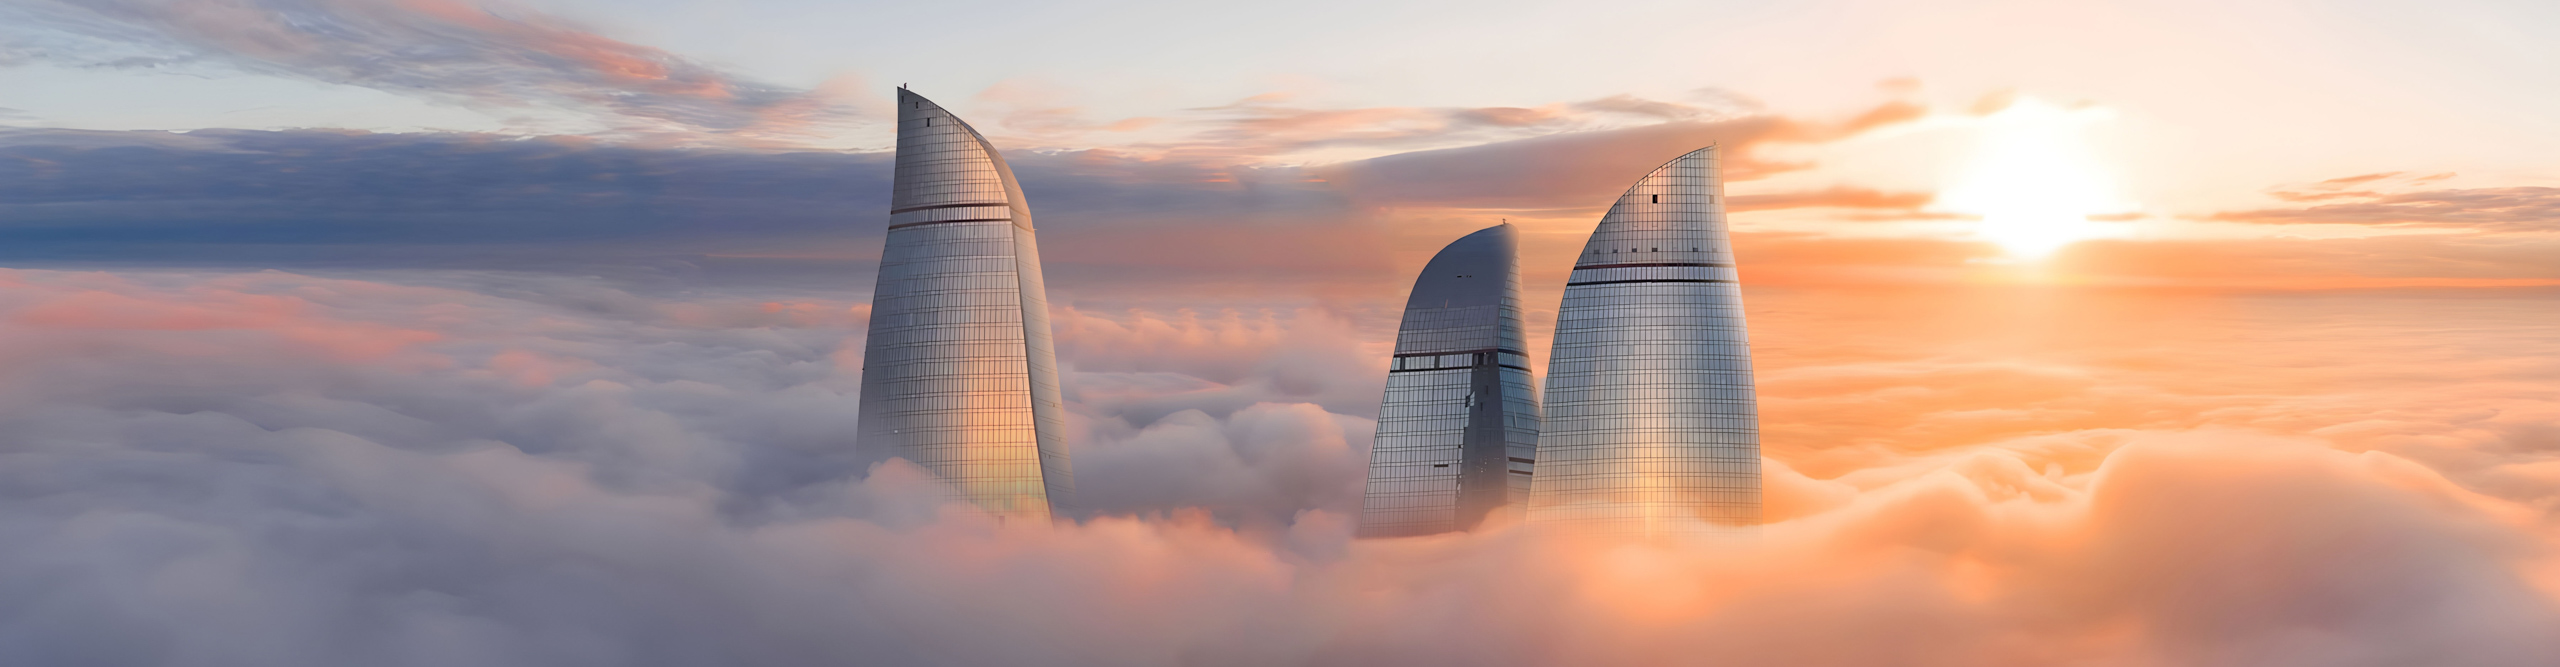 Flame towers among the clouds, Baku, Azerbaijan at sunset amongst orange clouds